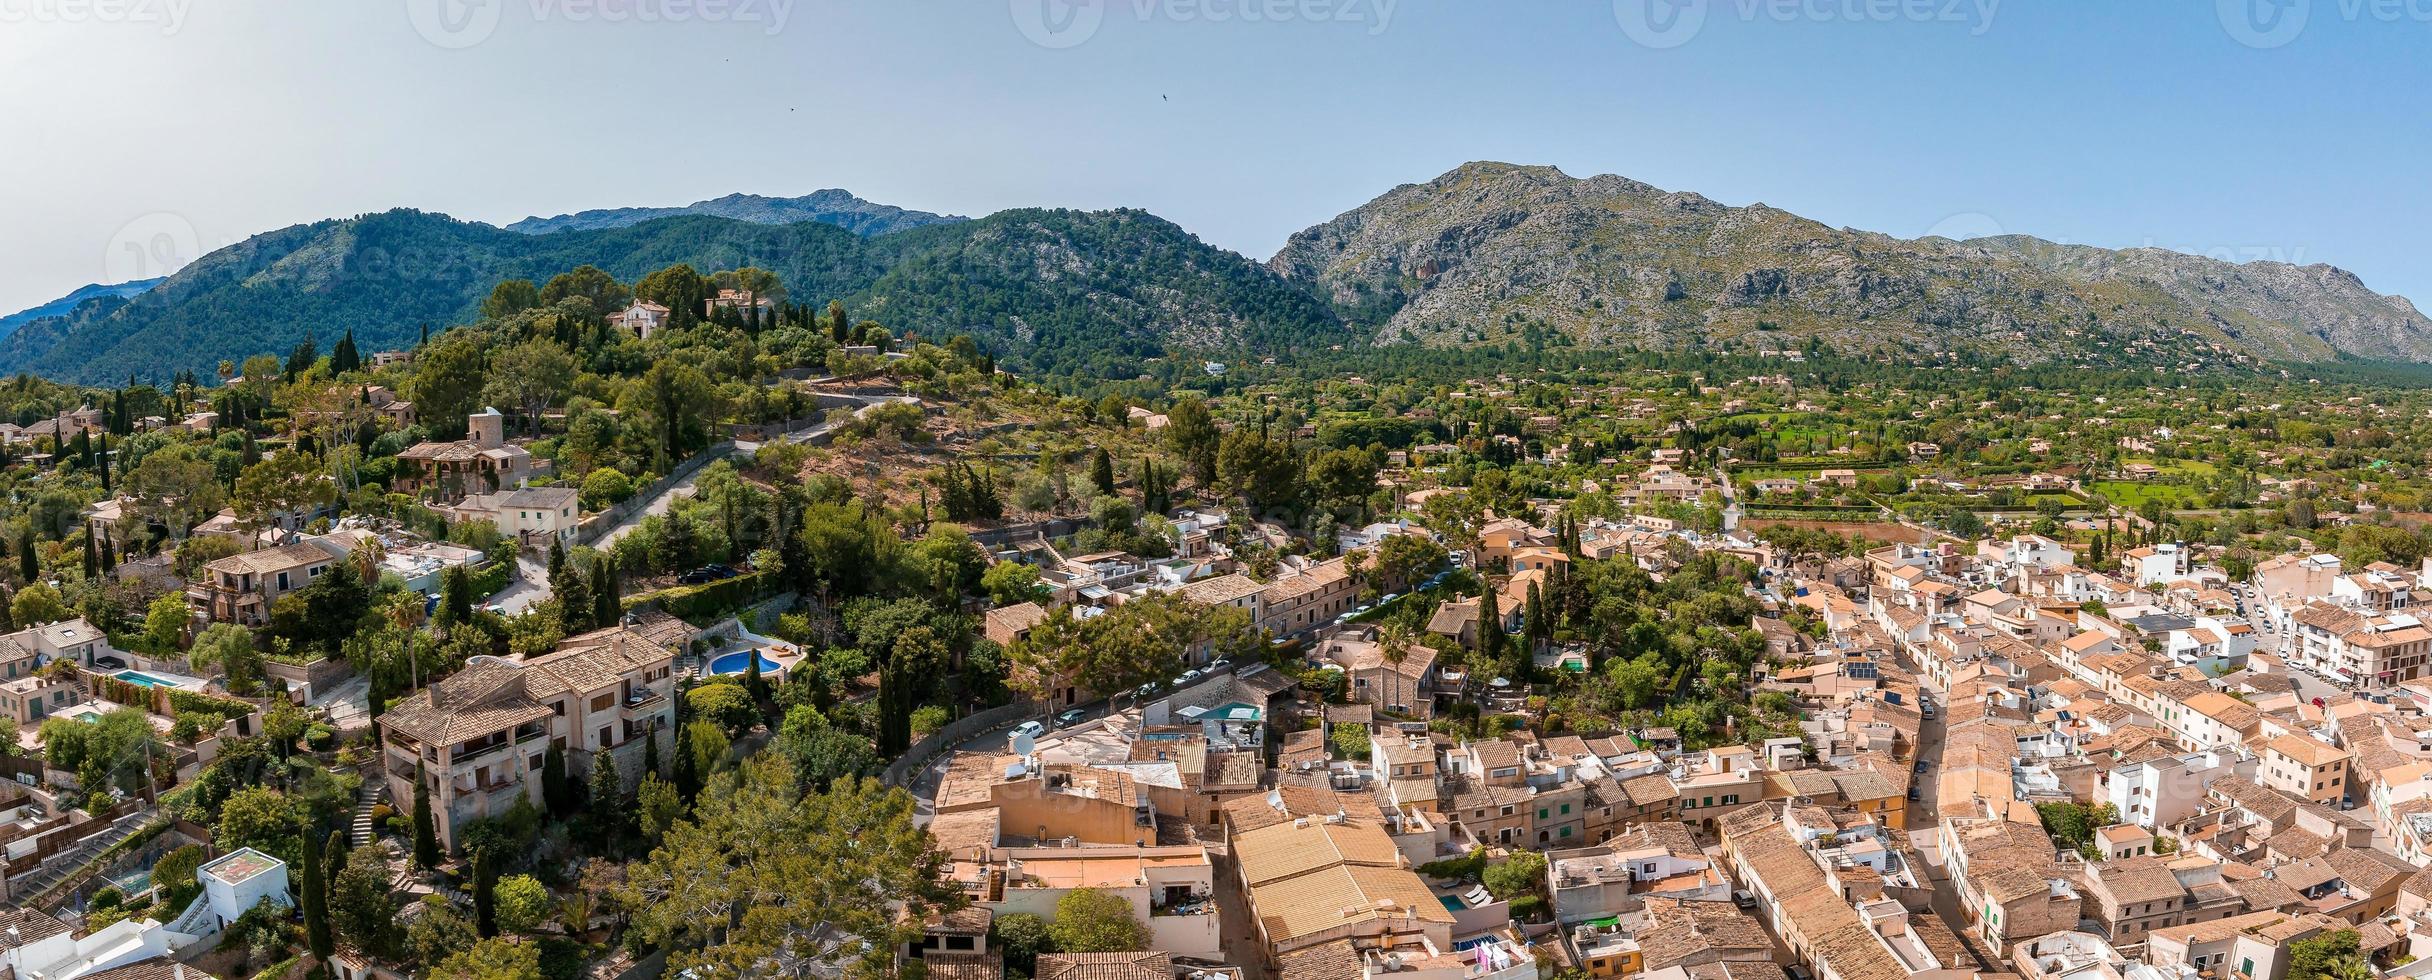 Aerial view of Pollenca, Mallorca, Spain. photo